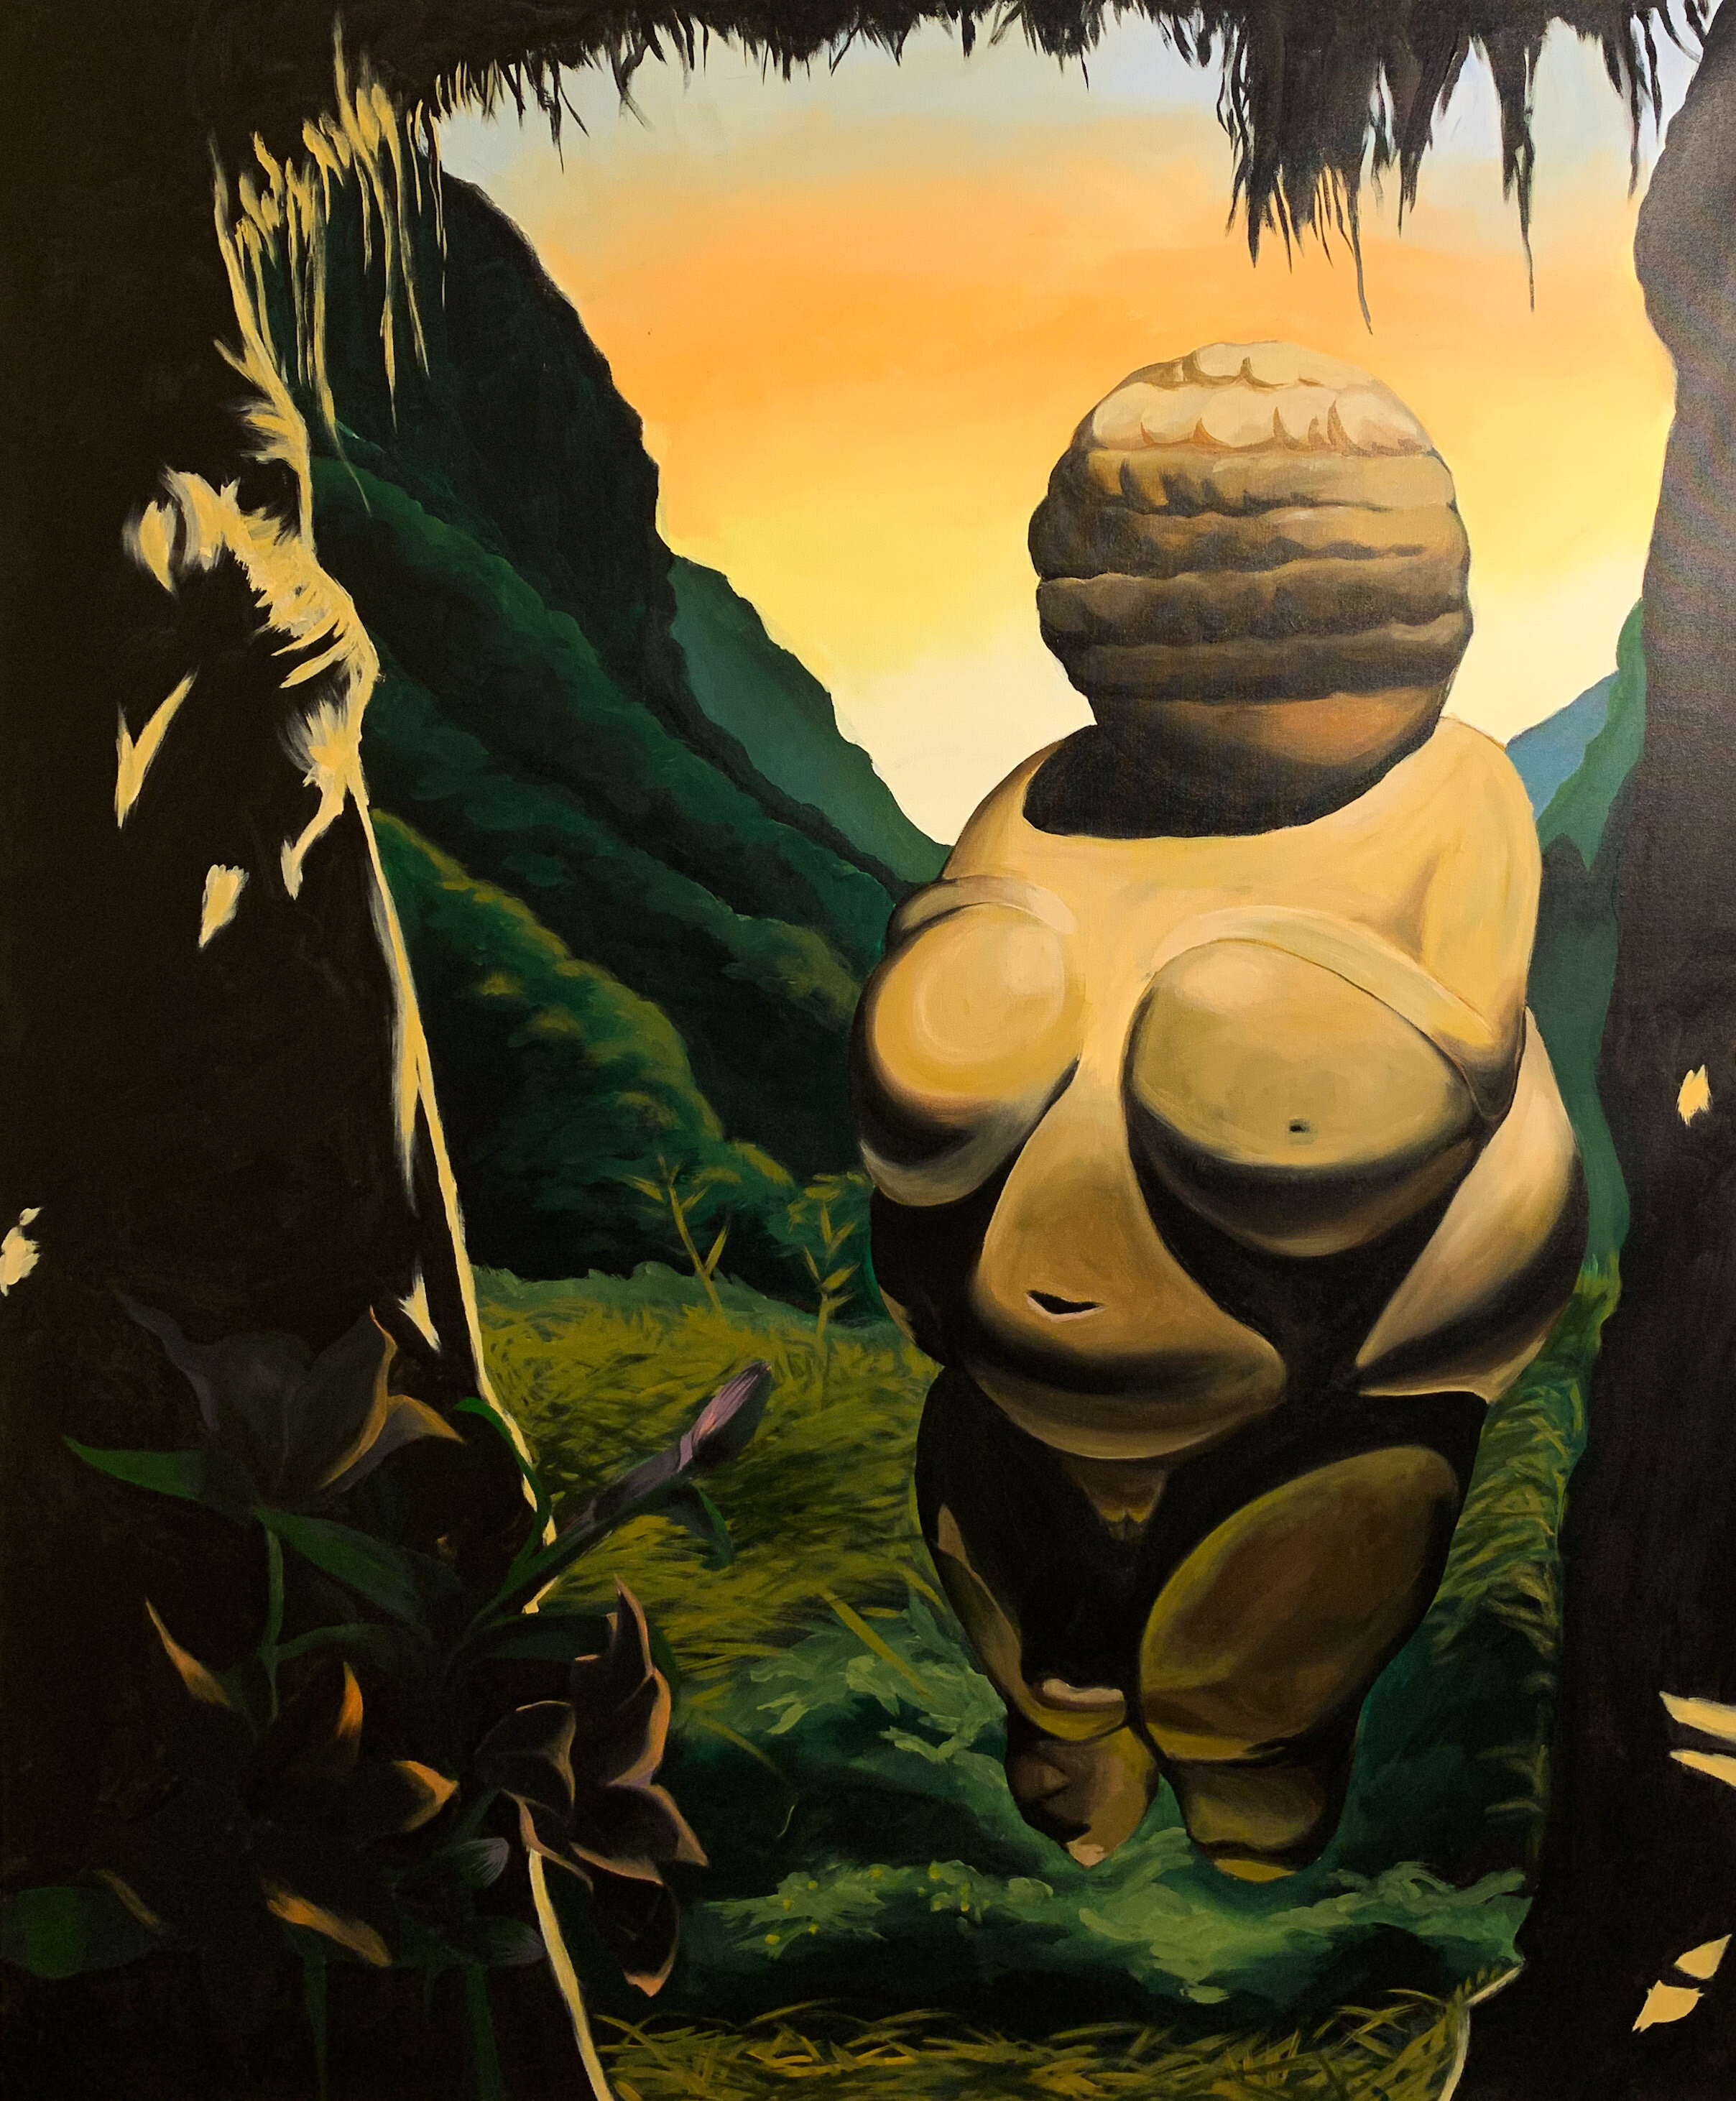 Convoque Seu Buda: The Venus of Willendorf